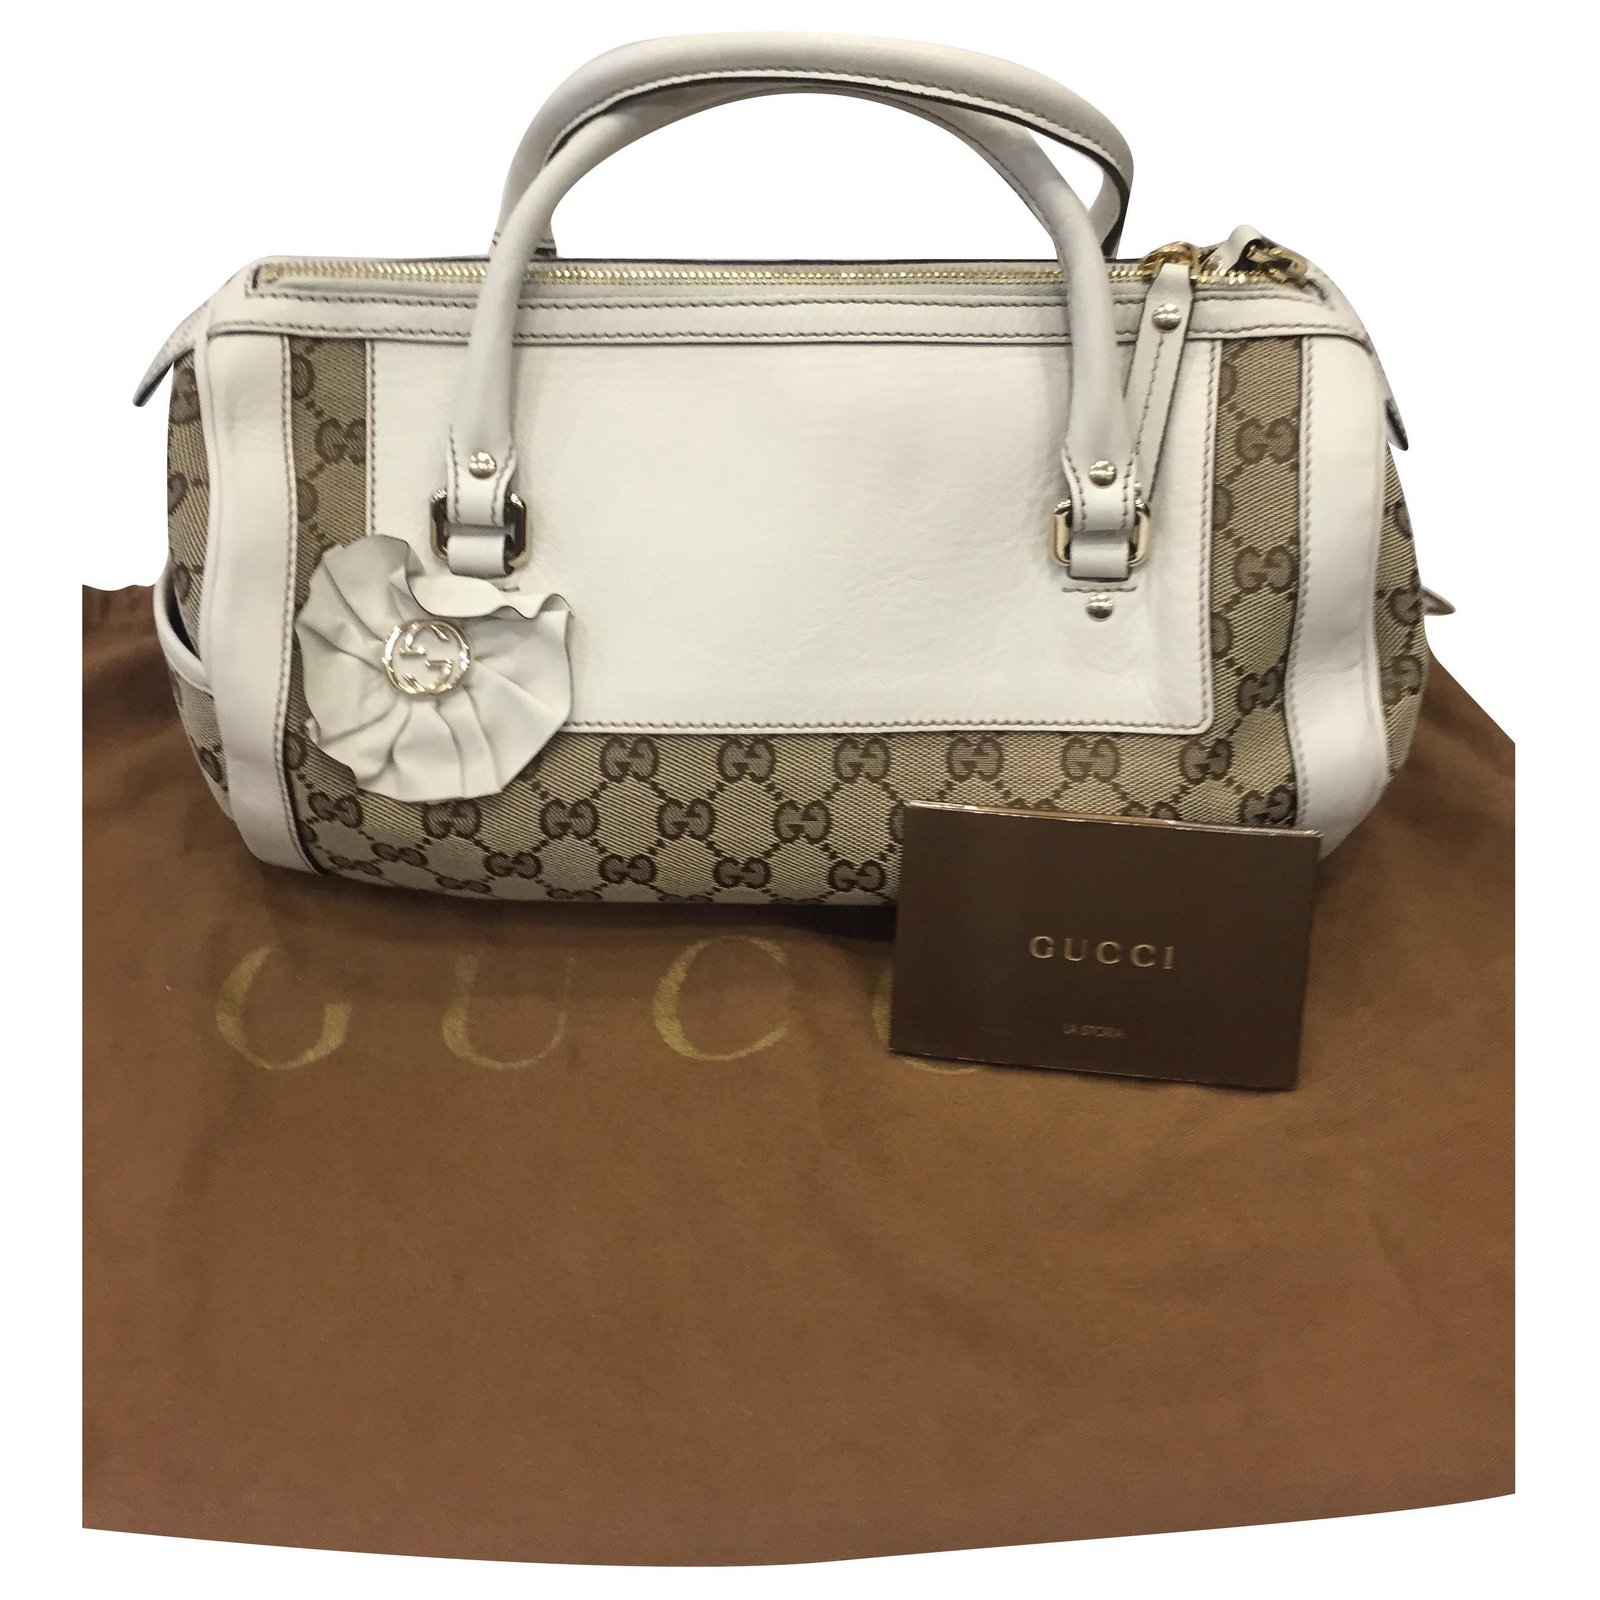 Gucci Handbags Handbags Cloth Other ref 